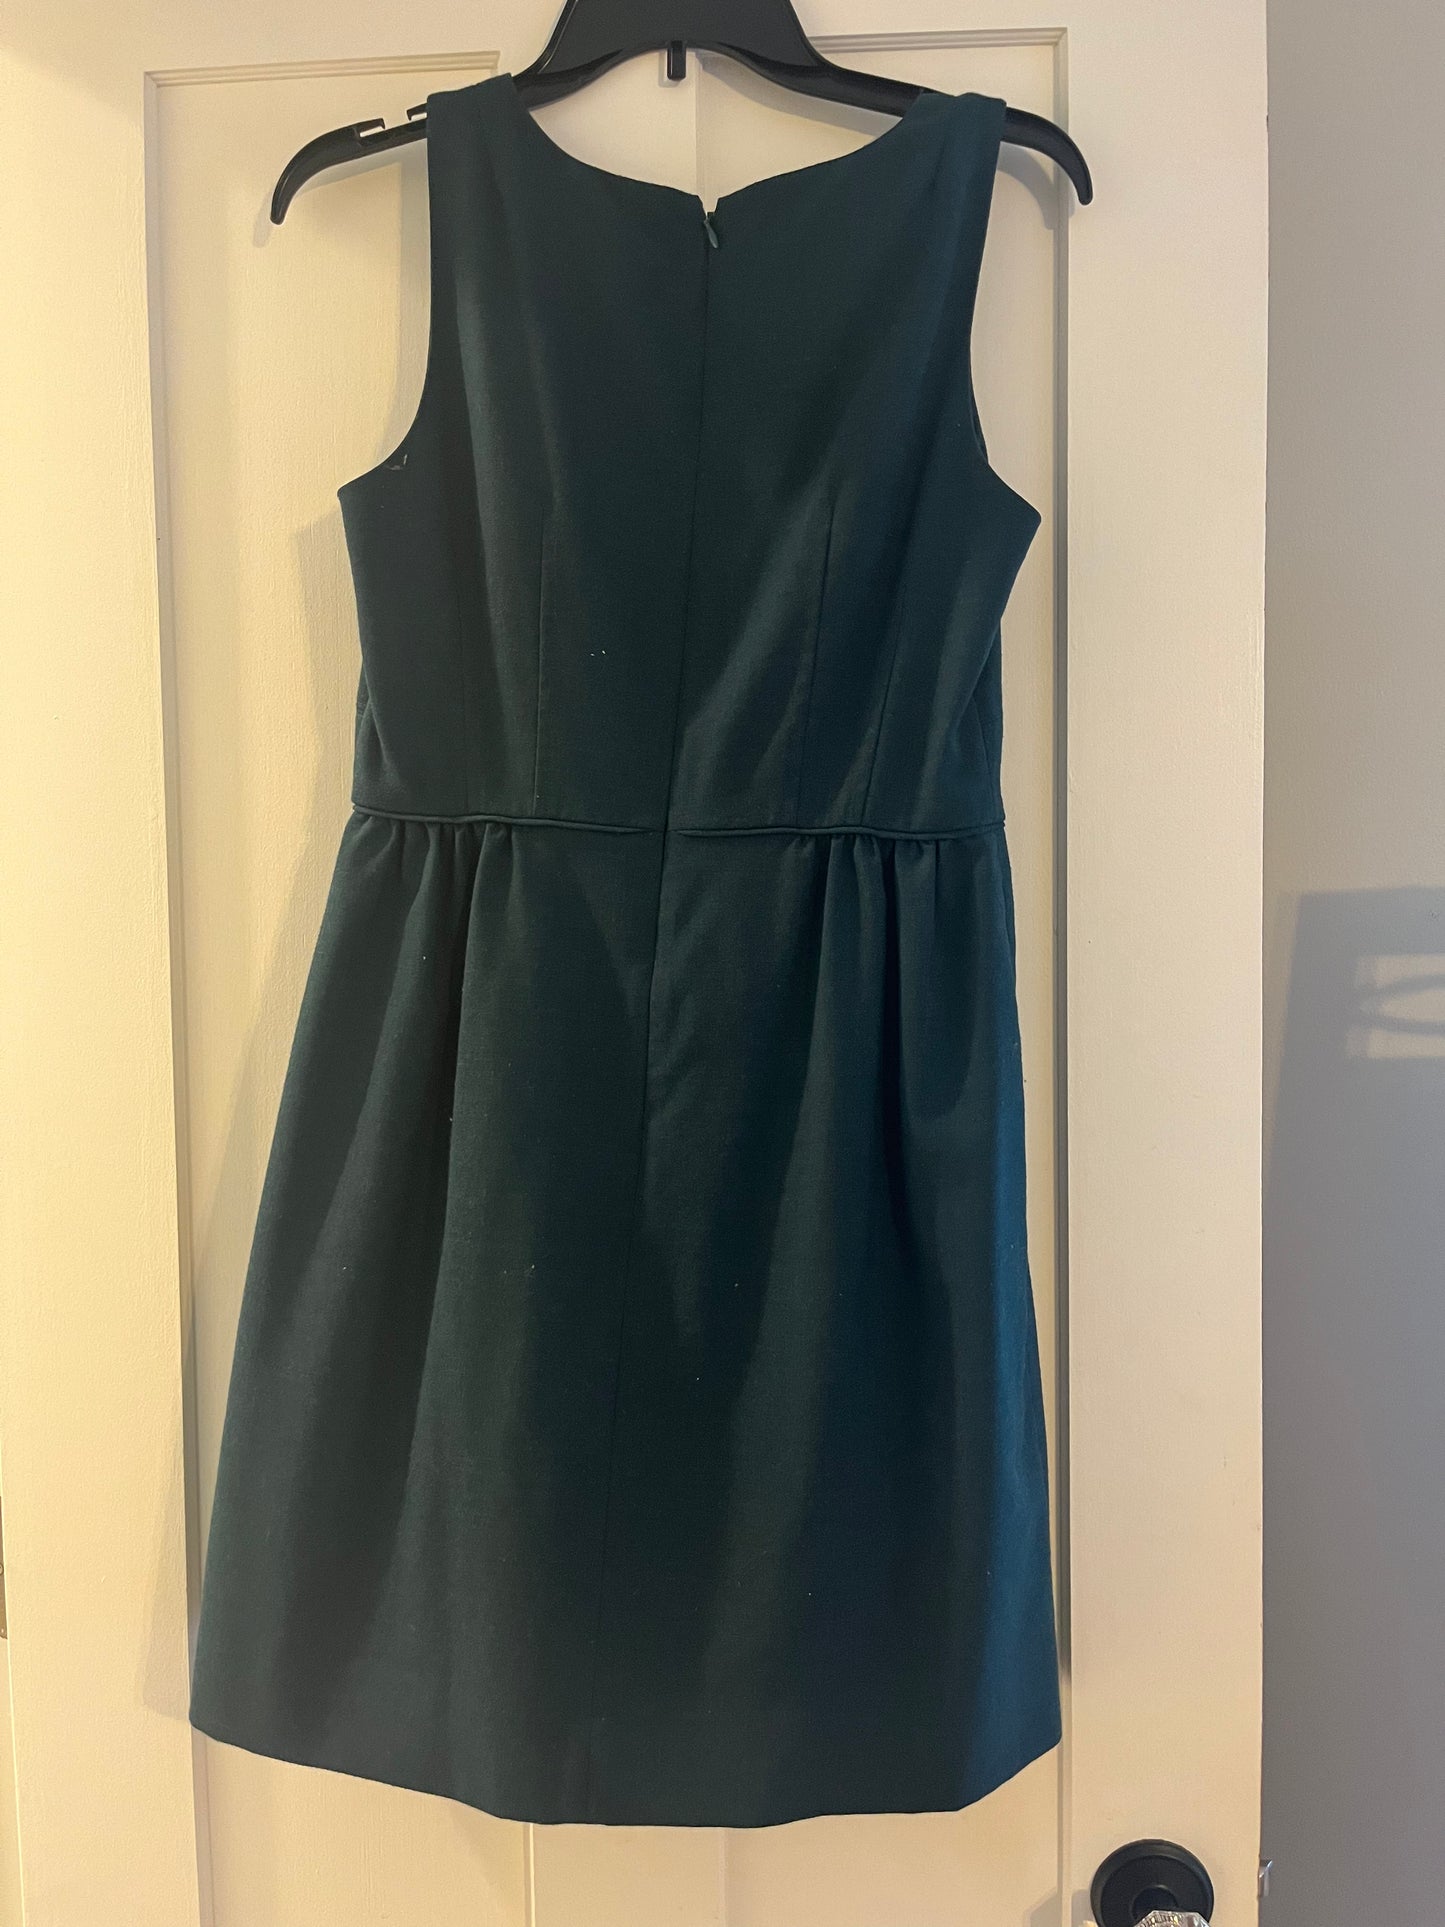 J Crew women’s Dress size 6 (Dark Green)